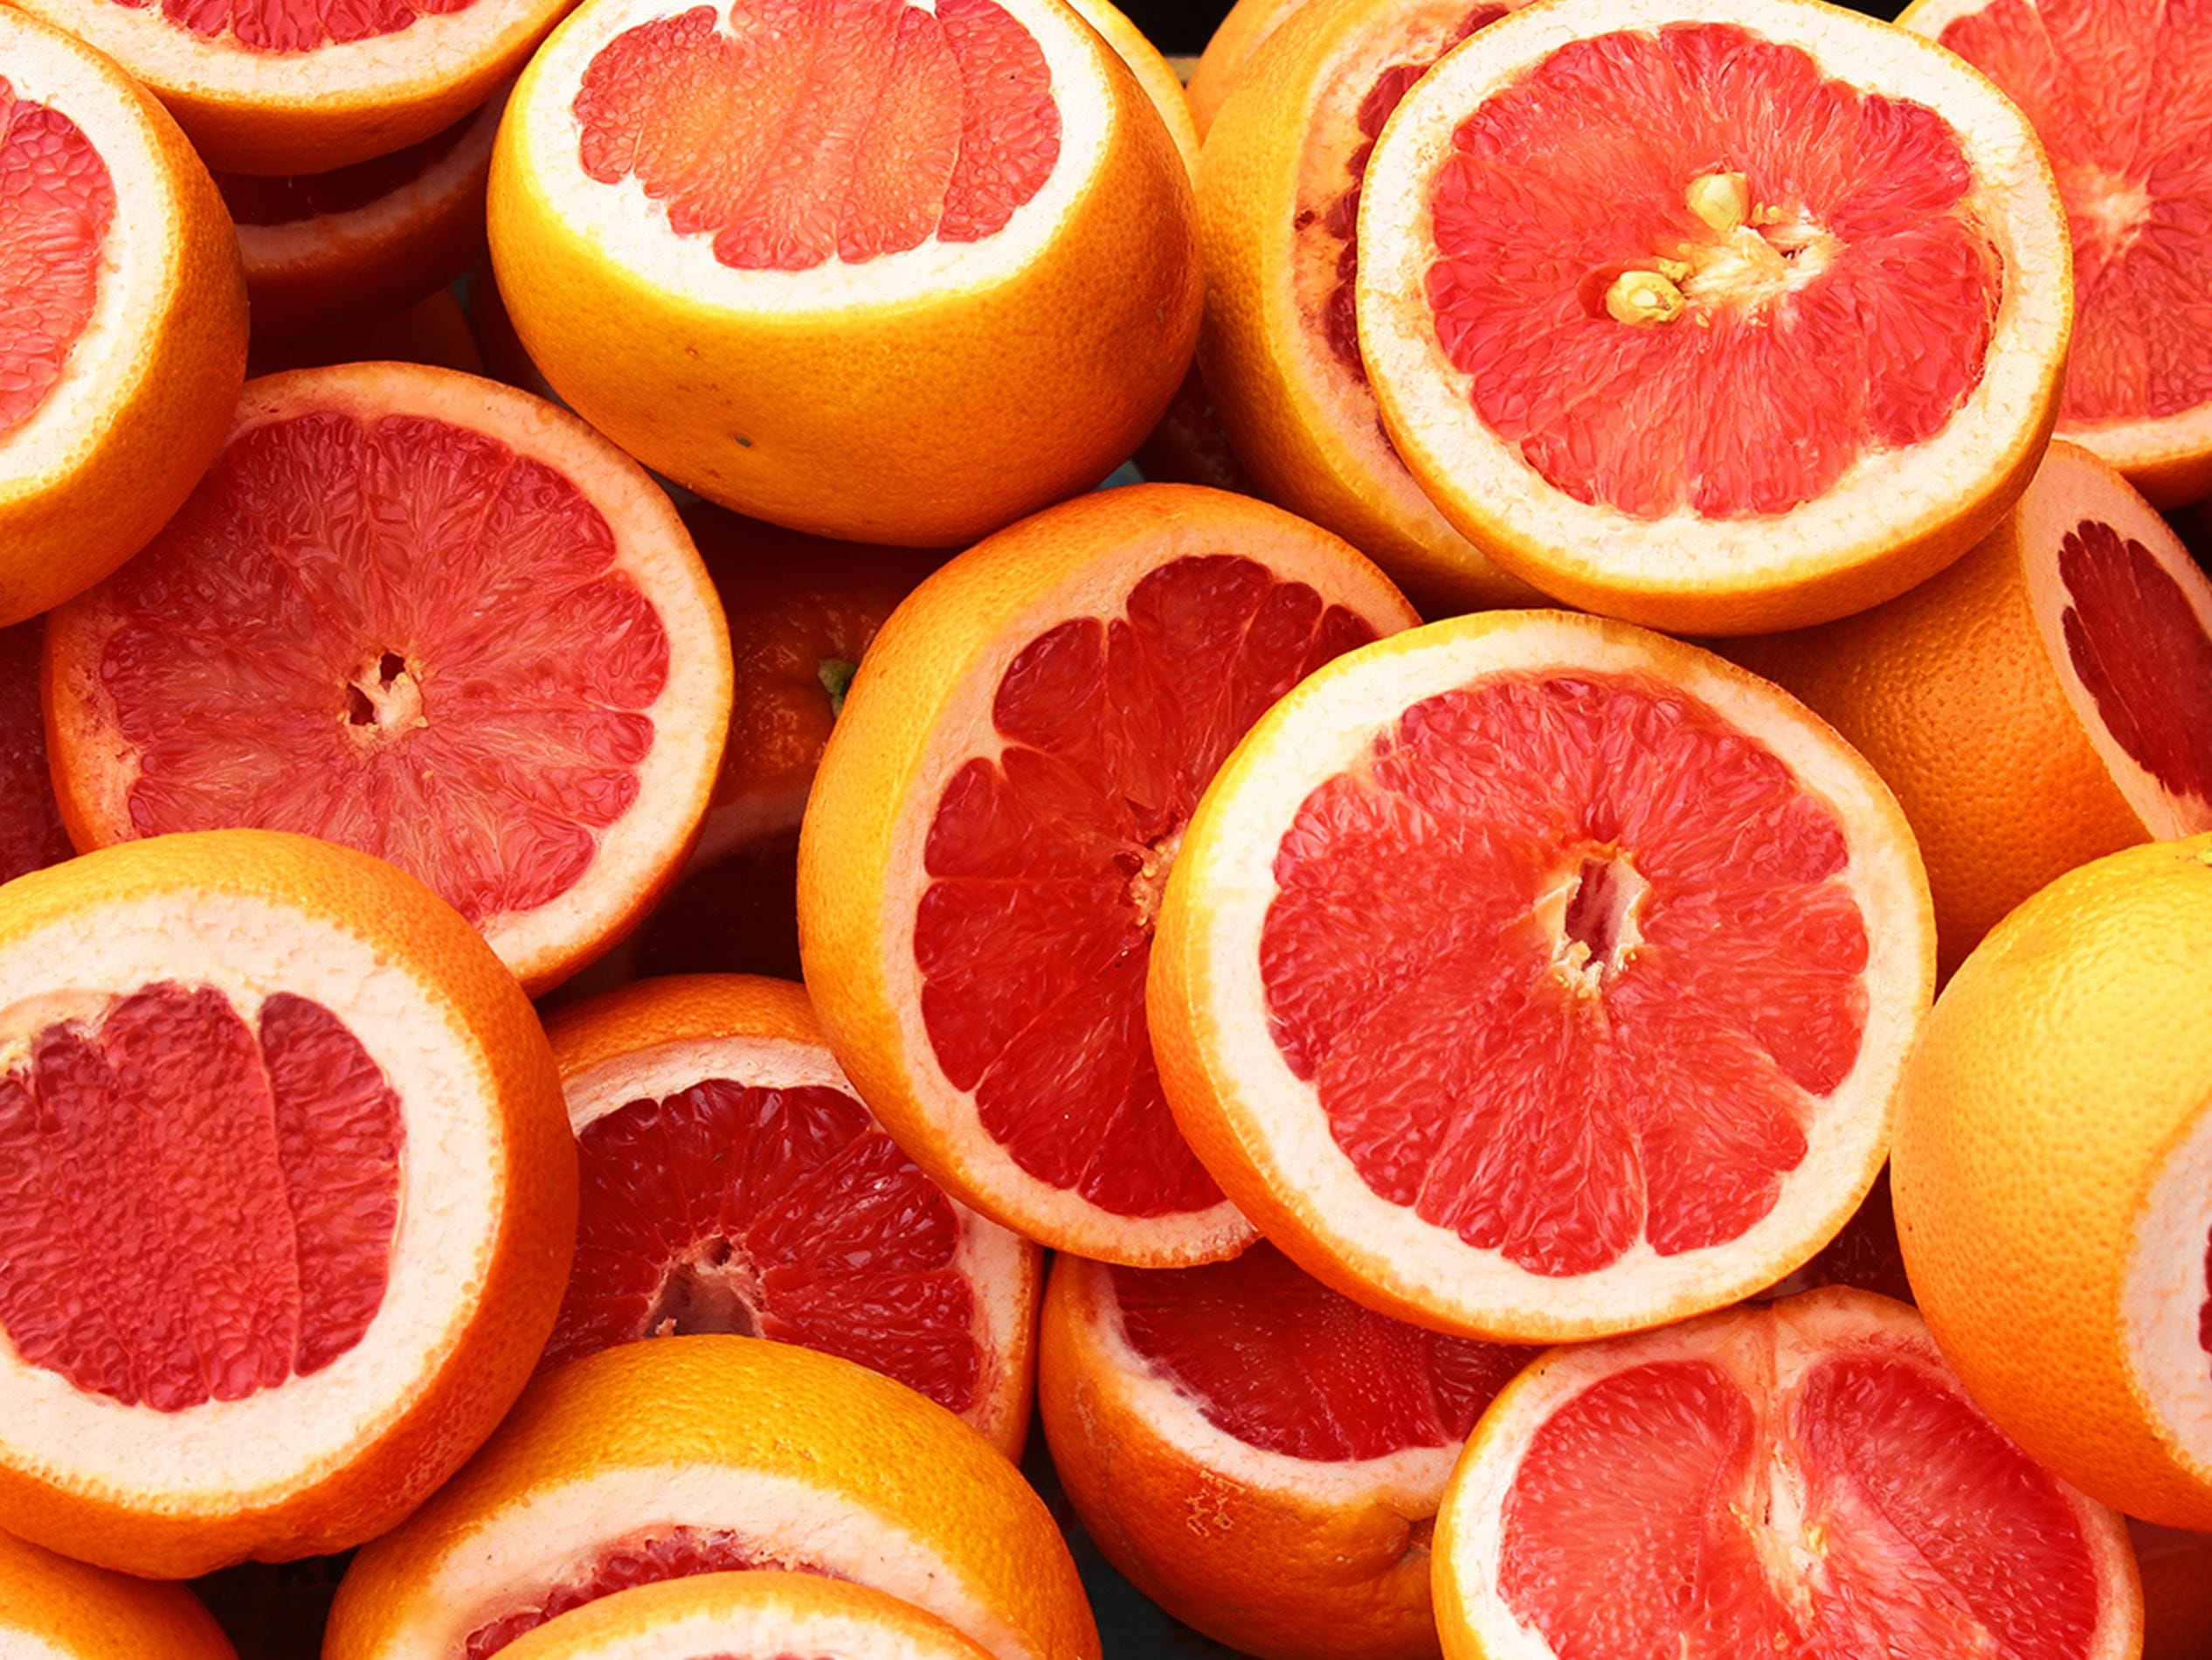 lipitor and grapefruit interaction